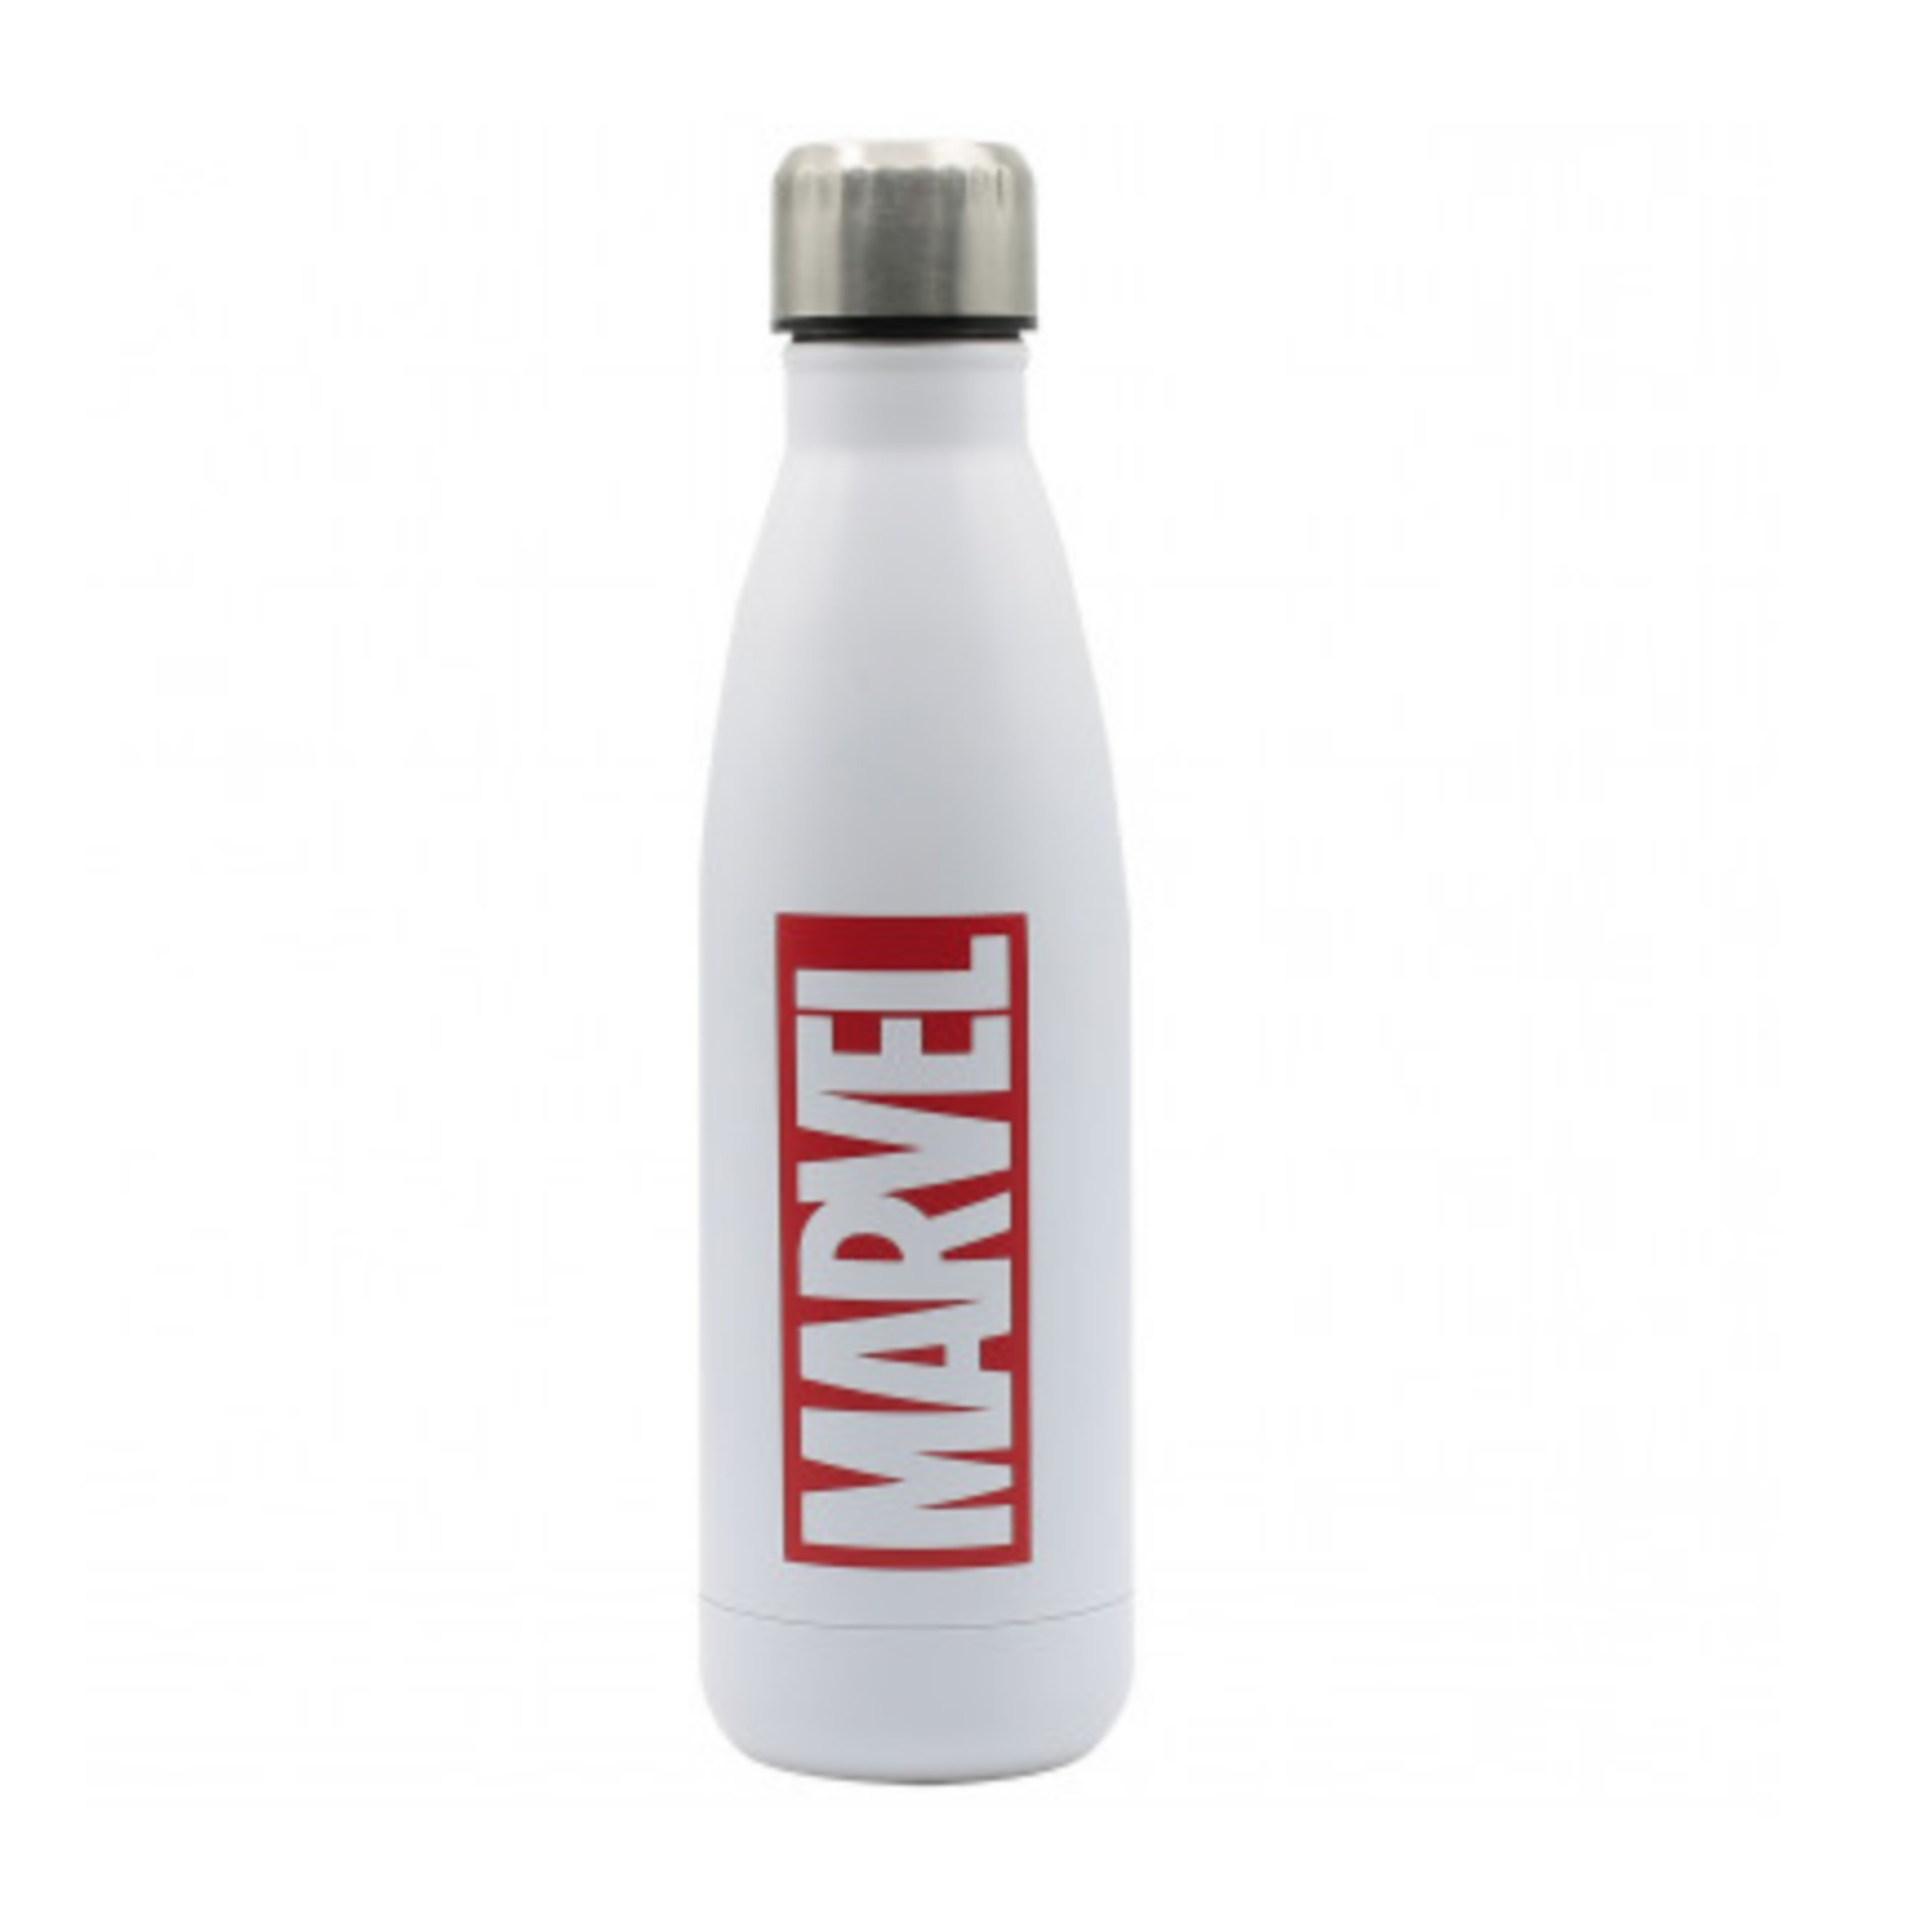 Puro Marvel Botella De Acero Inoxidable 500ml - blanco-rojo - 